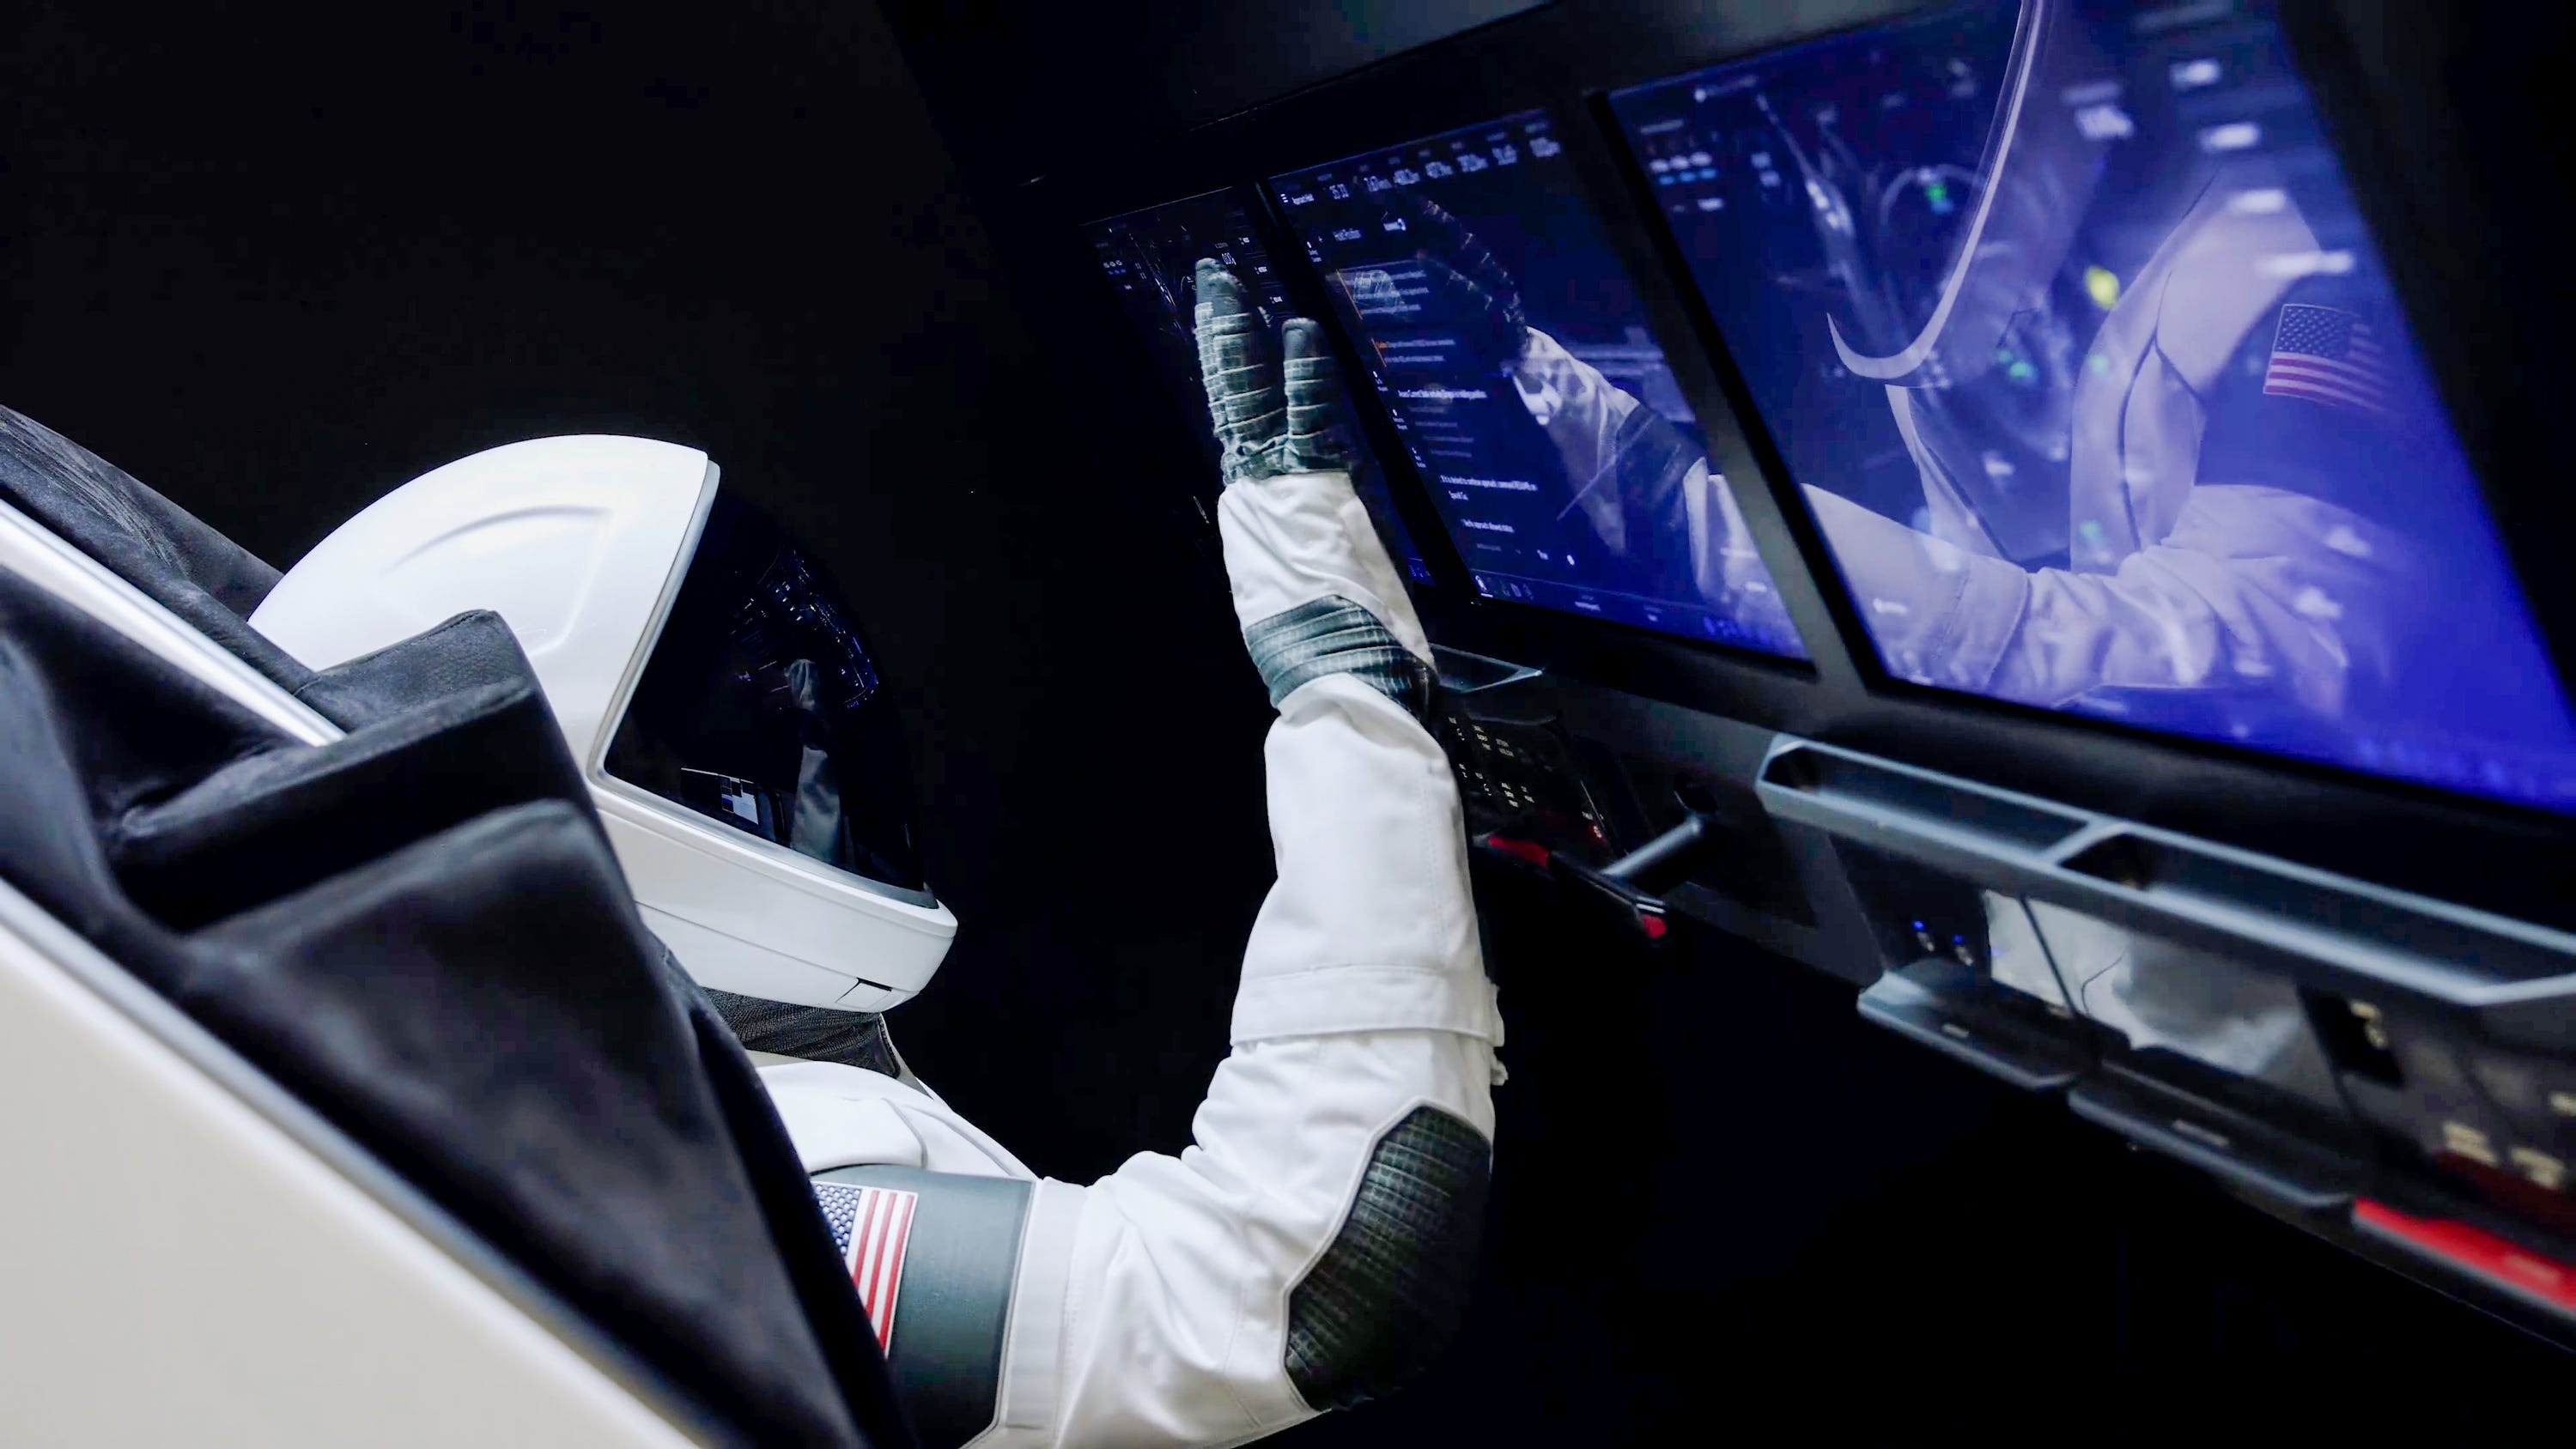 SpaceX - Crew Dragon Displays UI/UX